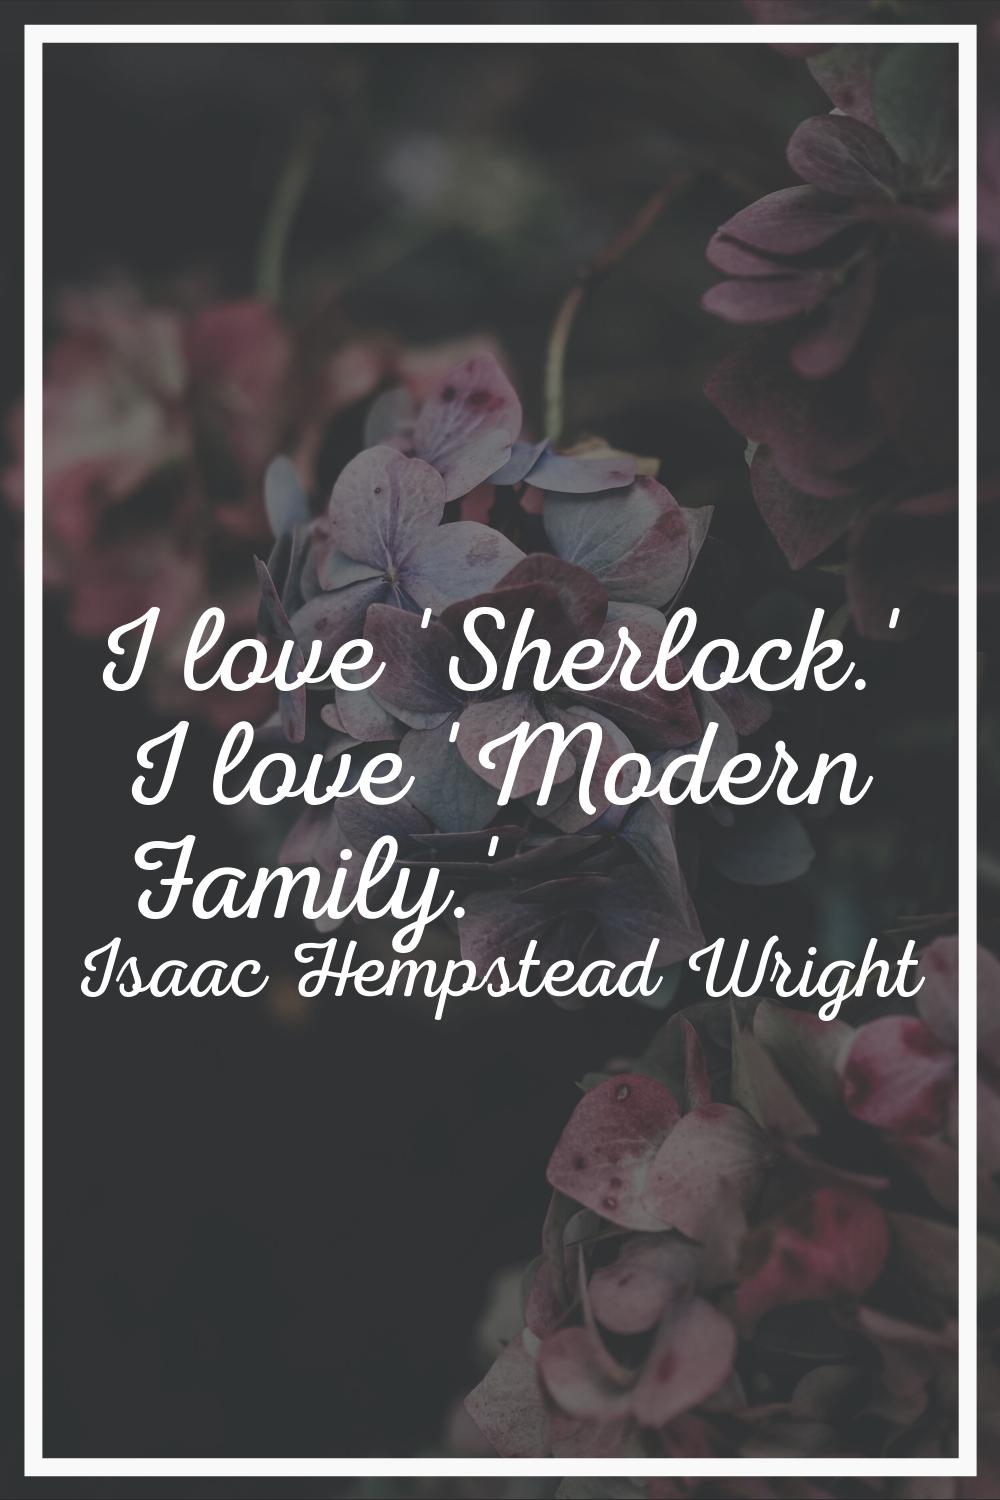 I love 'Sherlock.' I love 'Modern Family.'